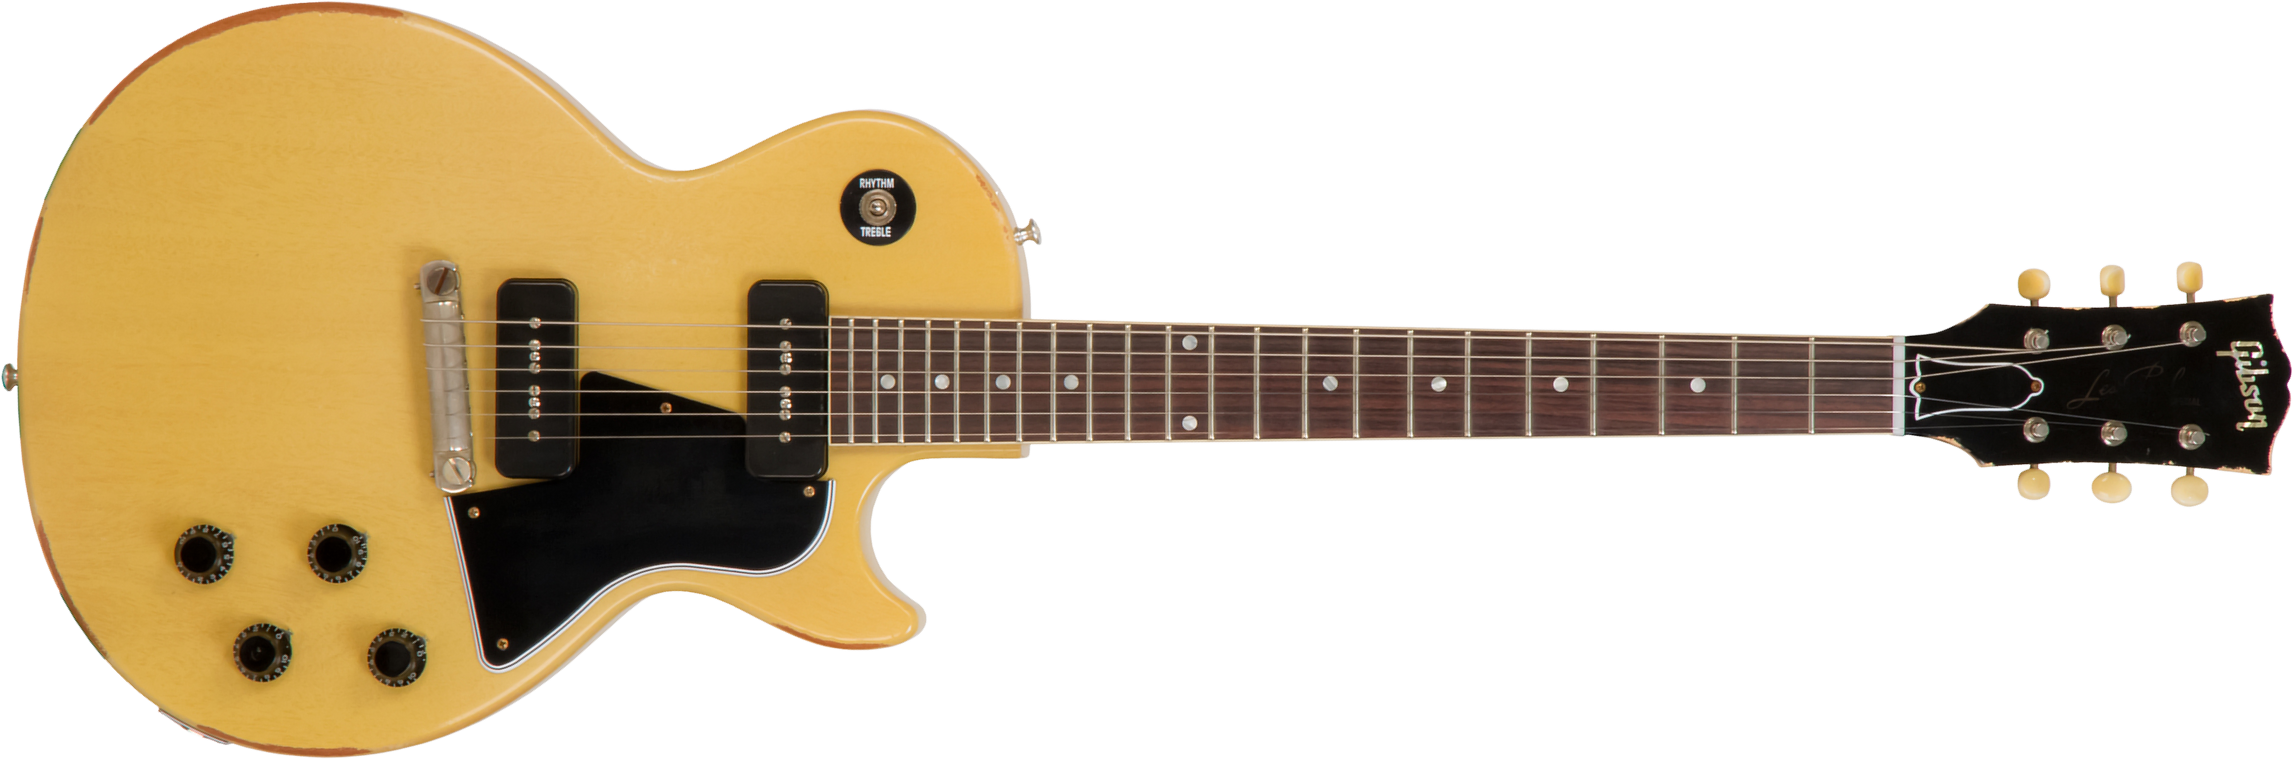 Gibson Custom Shop M2m Les Paul Special 1957 Single Cut Reissue P90 Ht Rw #70811 - Heavy Aged Tv Yellow - Guitarra eléctrica de corte único. - Main pi